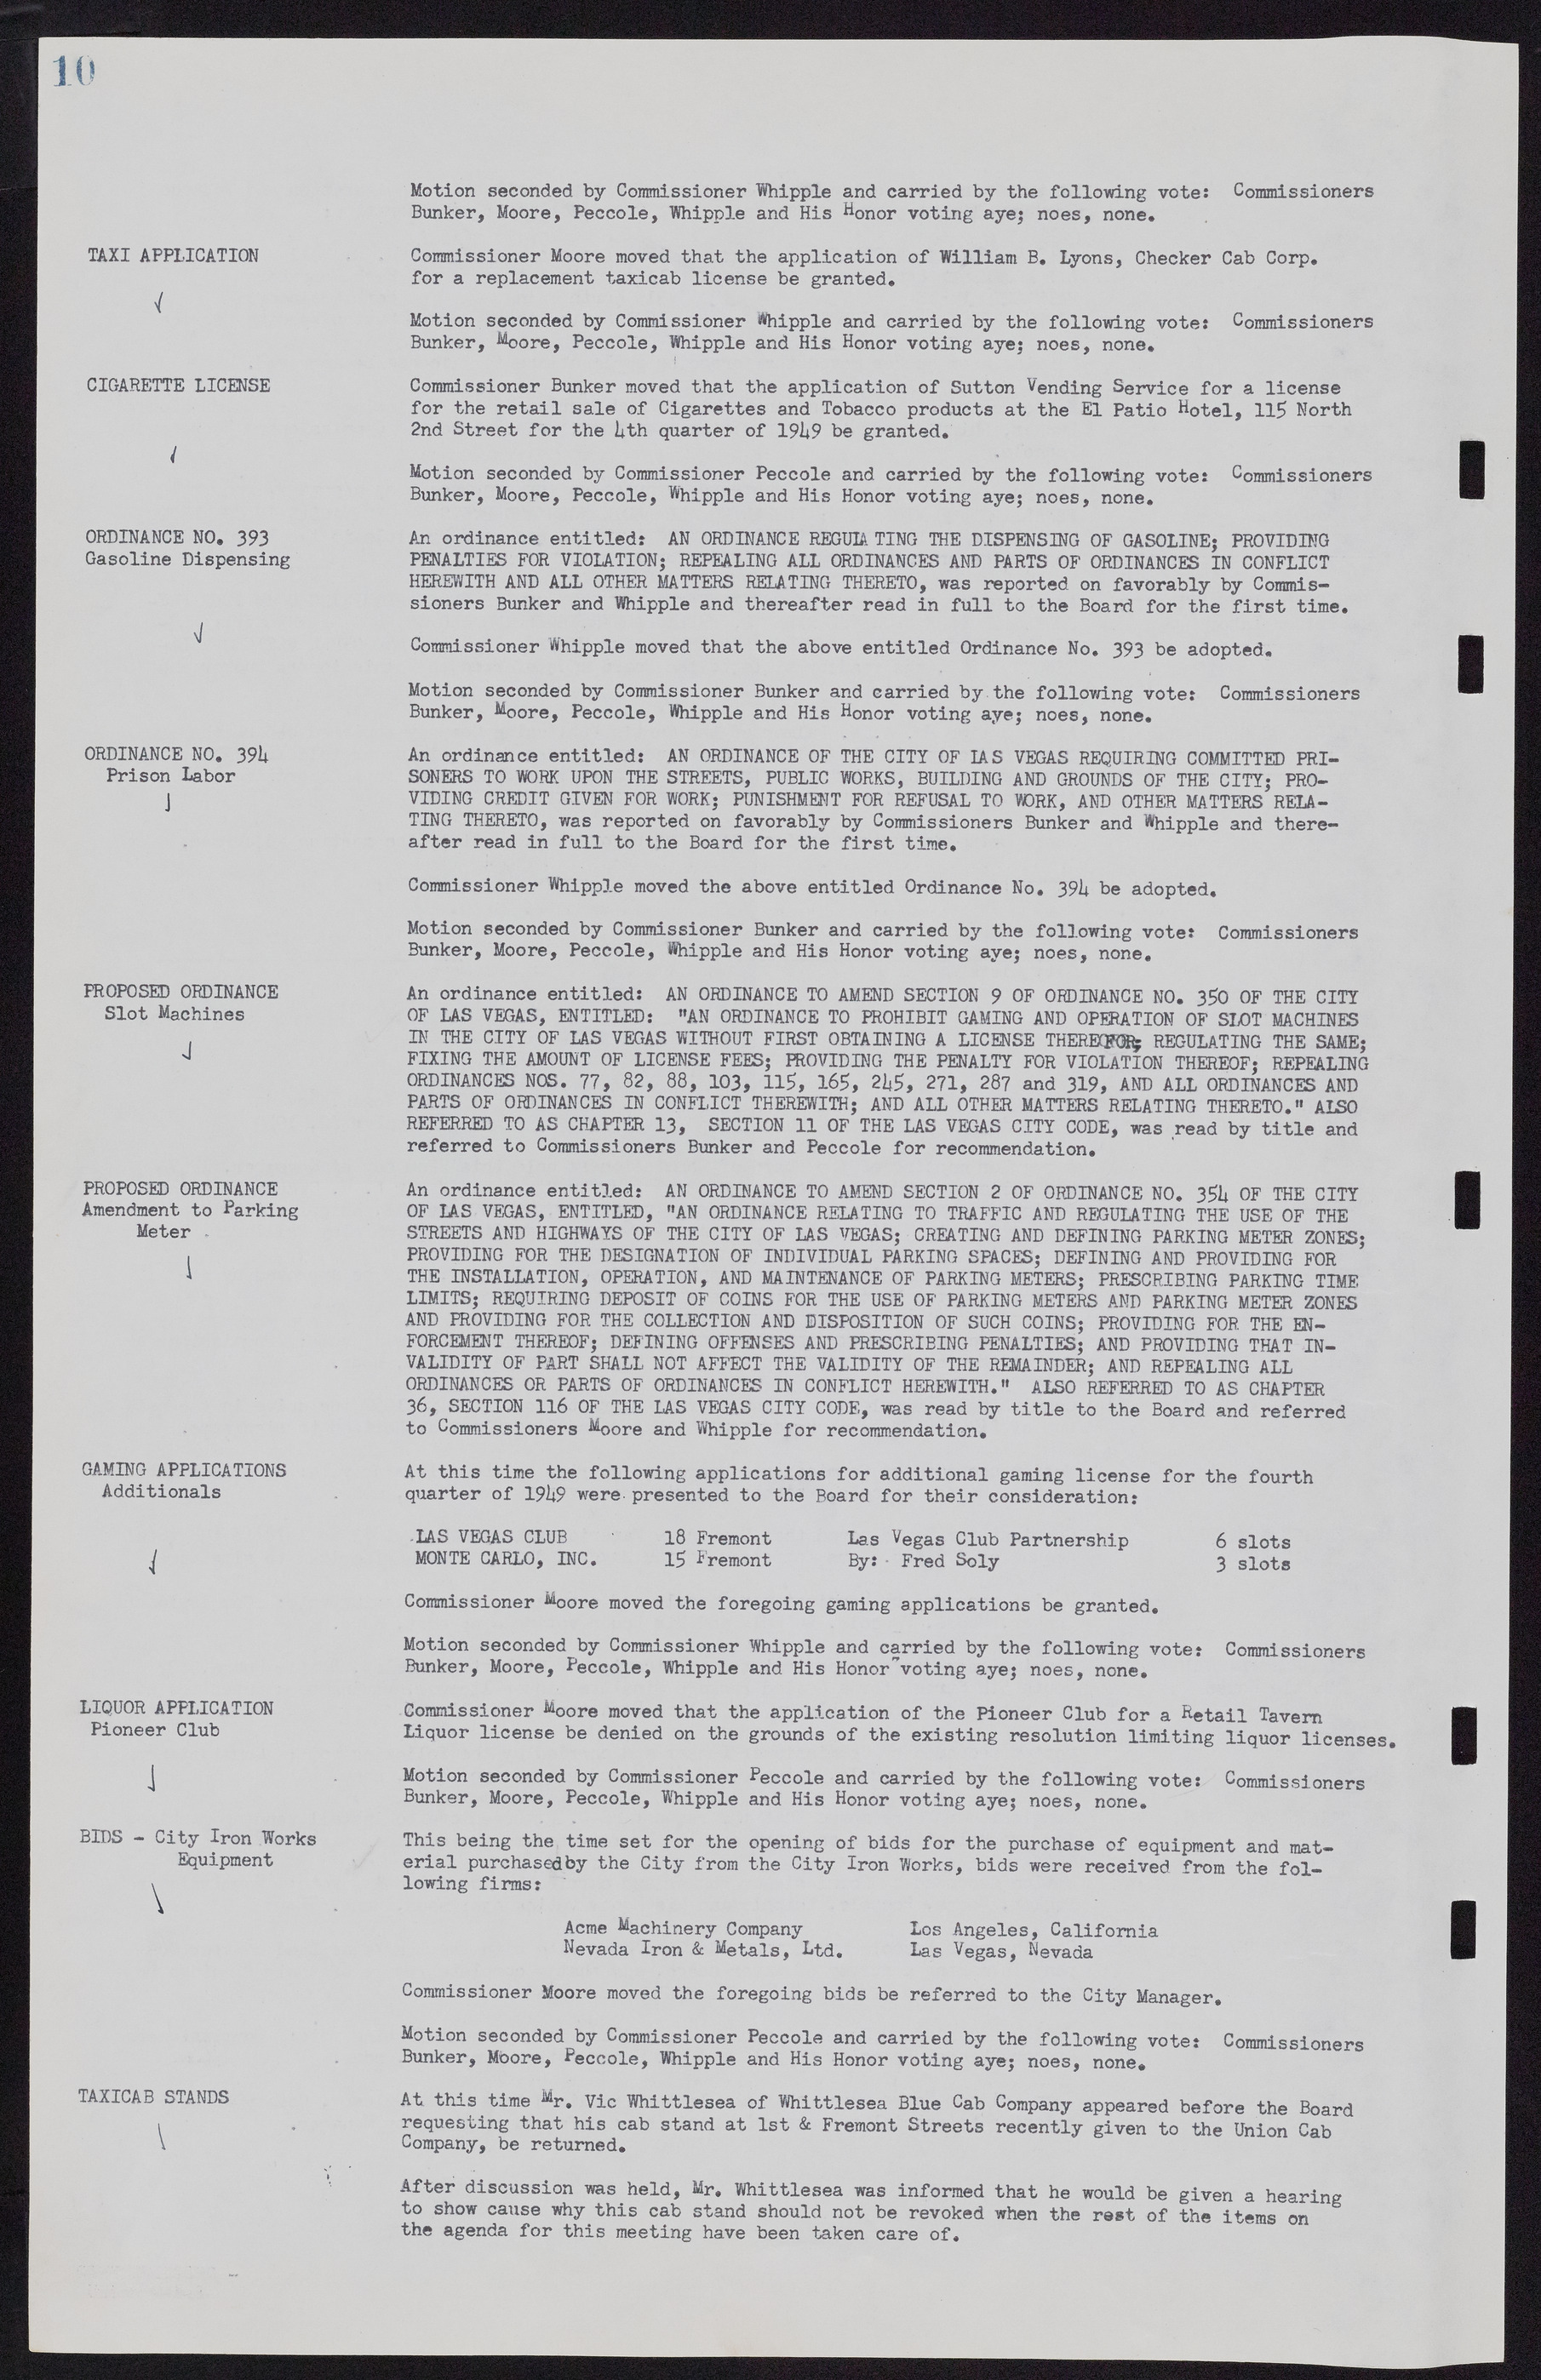 Las Vegas City Commission Minutes, November 7, 1949 to May 21, 1952, lvc000007-16